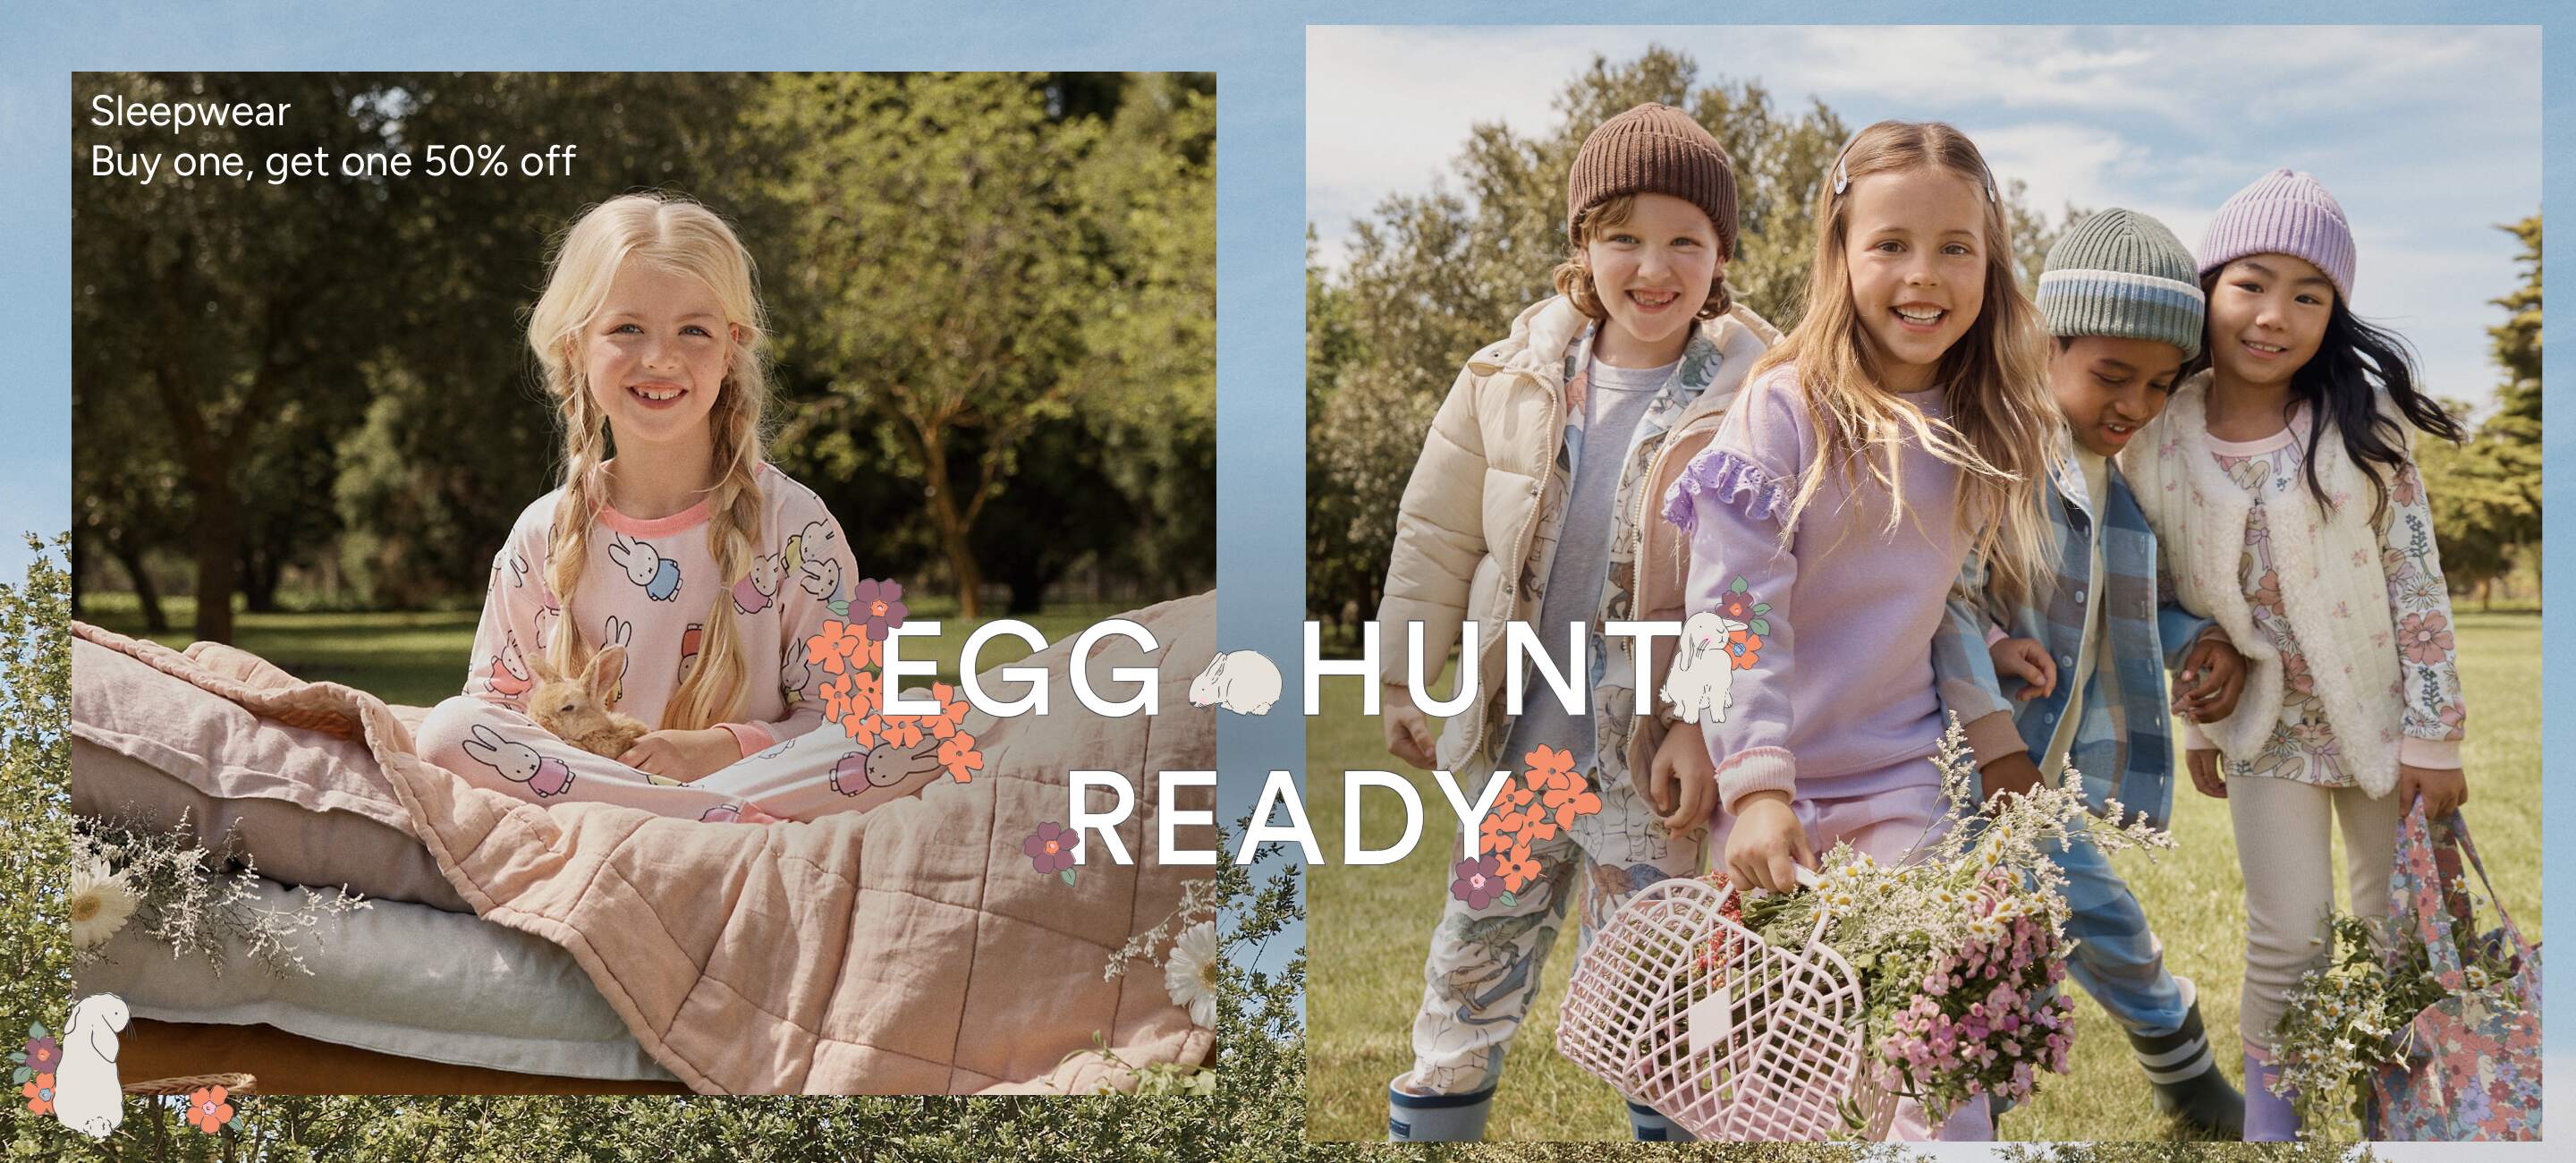 Egg Hunt Ready